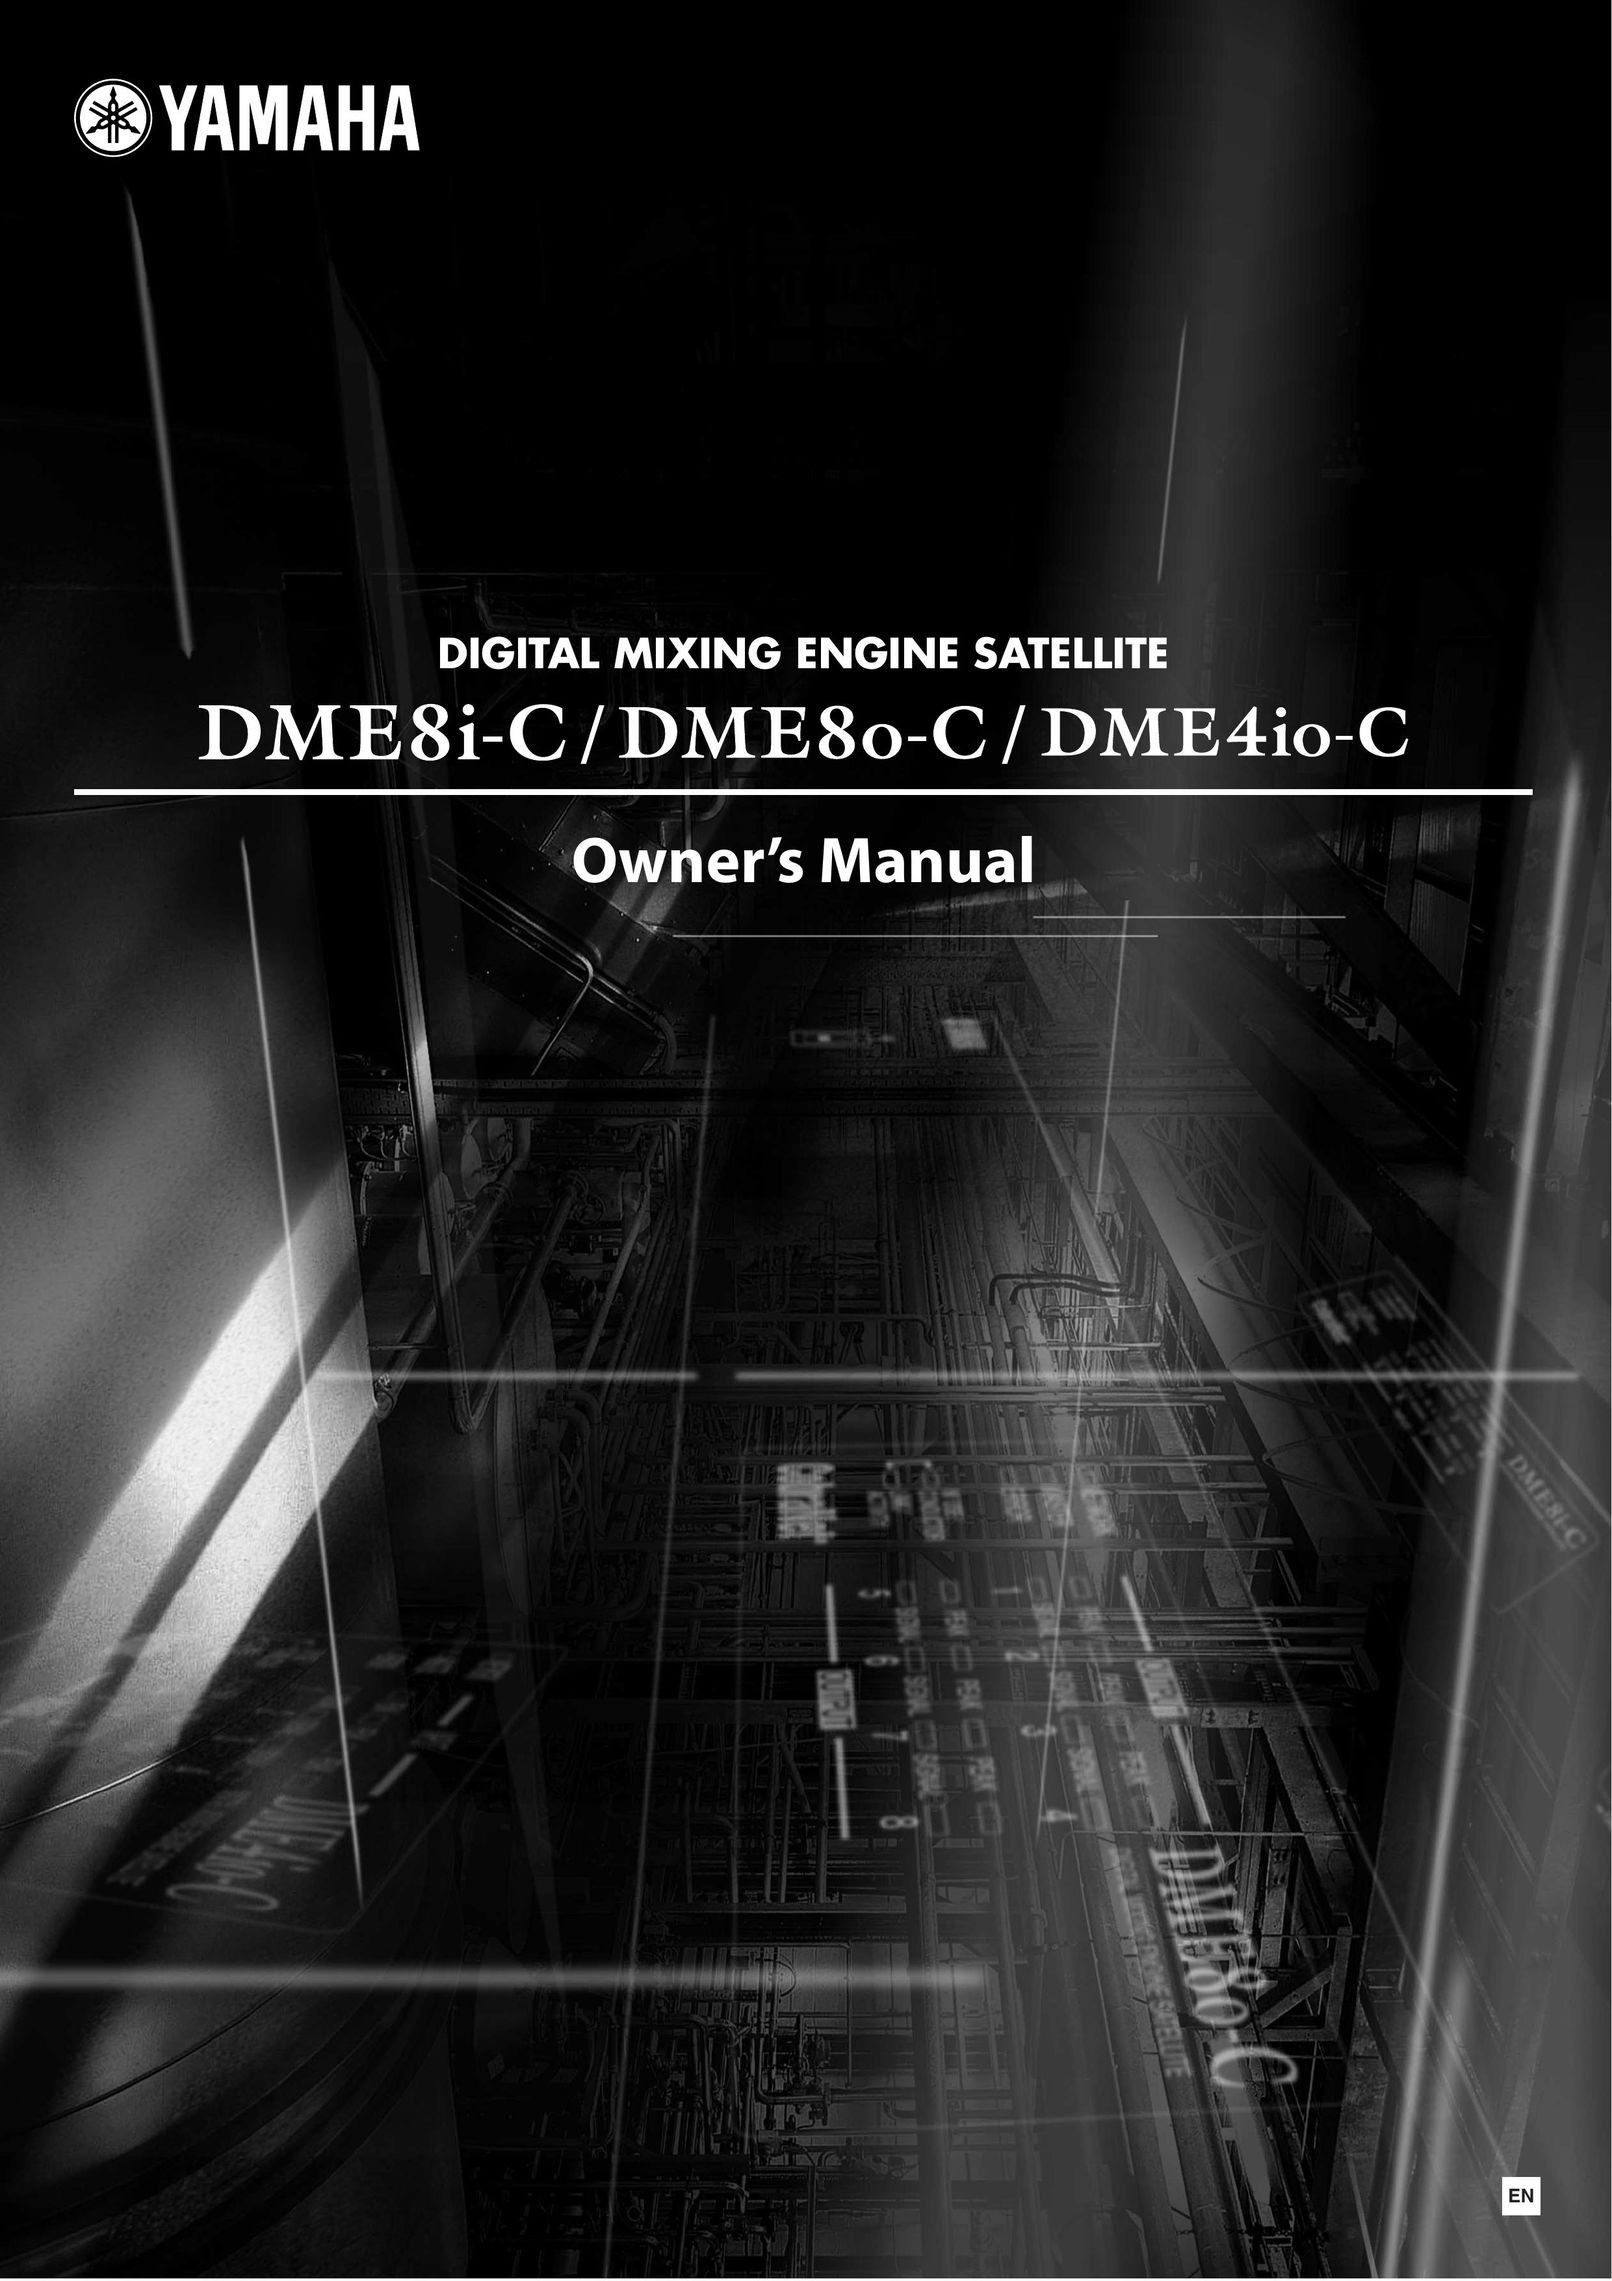 Yamaha DME8o-C Satellite TV System User Manual